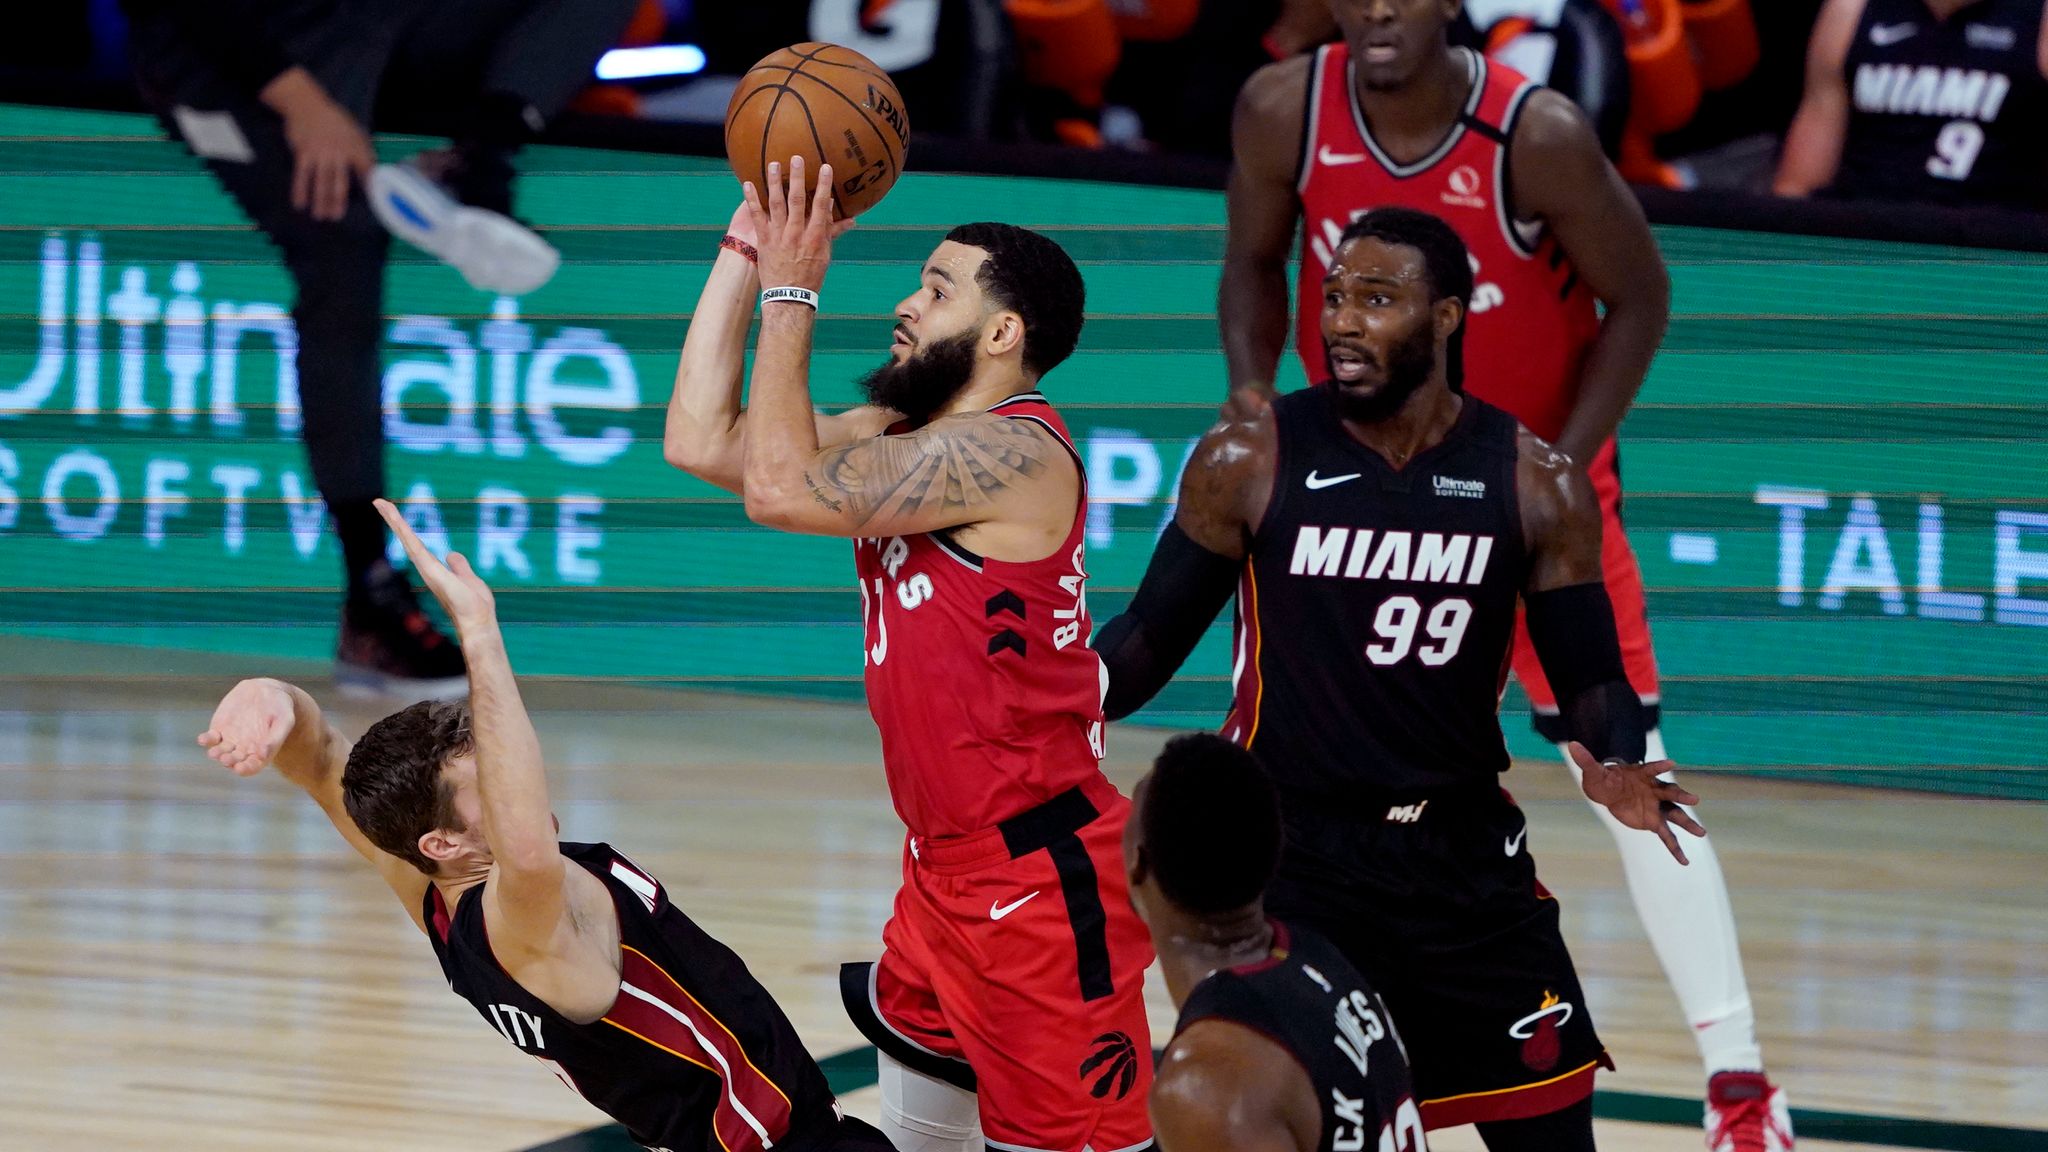 Fred VanVleet leads Toronto Raptors past Miami Heat | NBA News ...